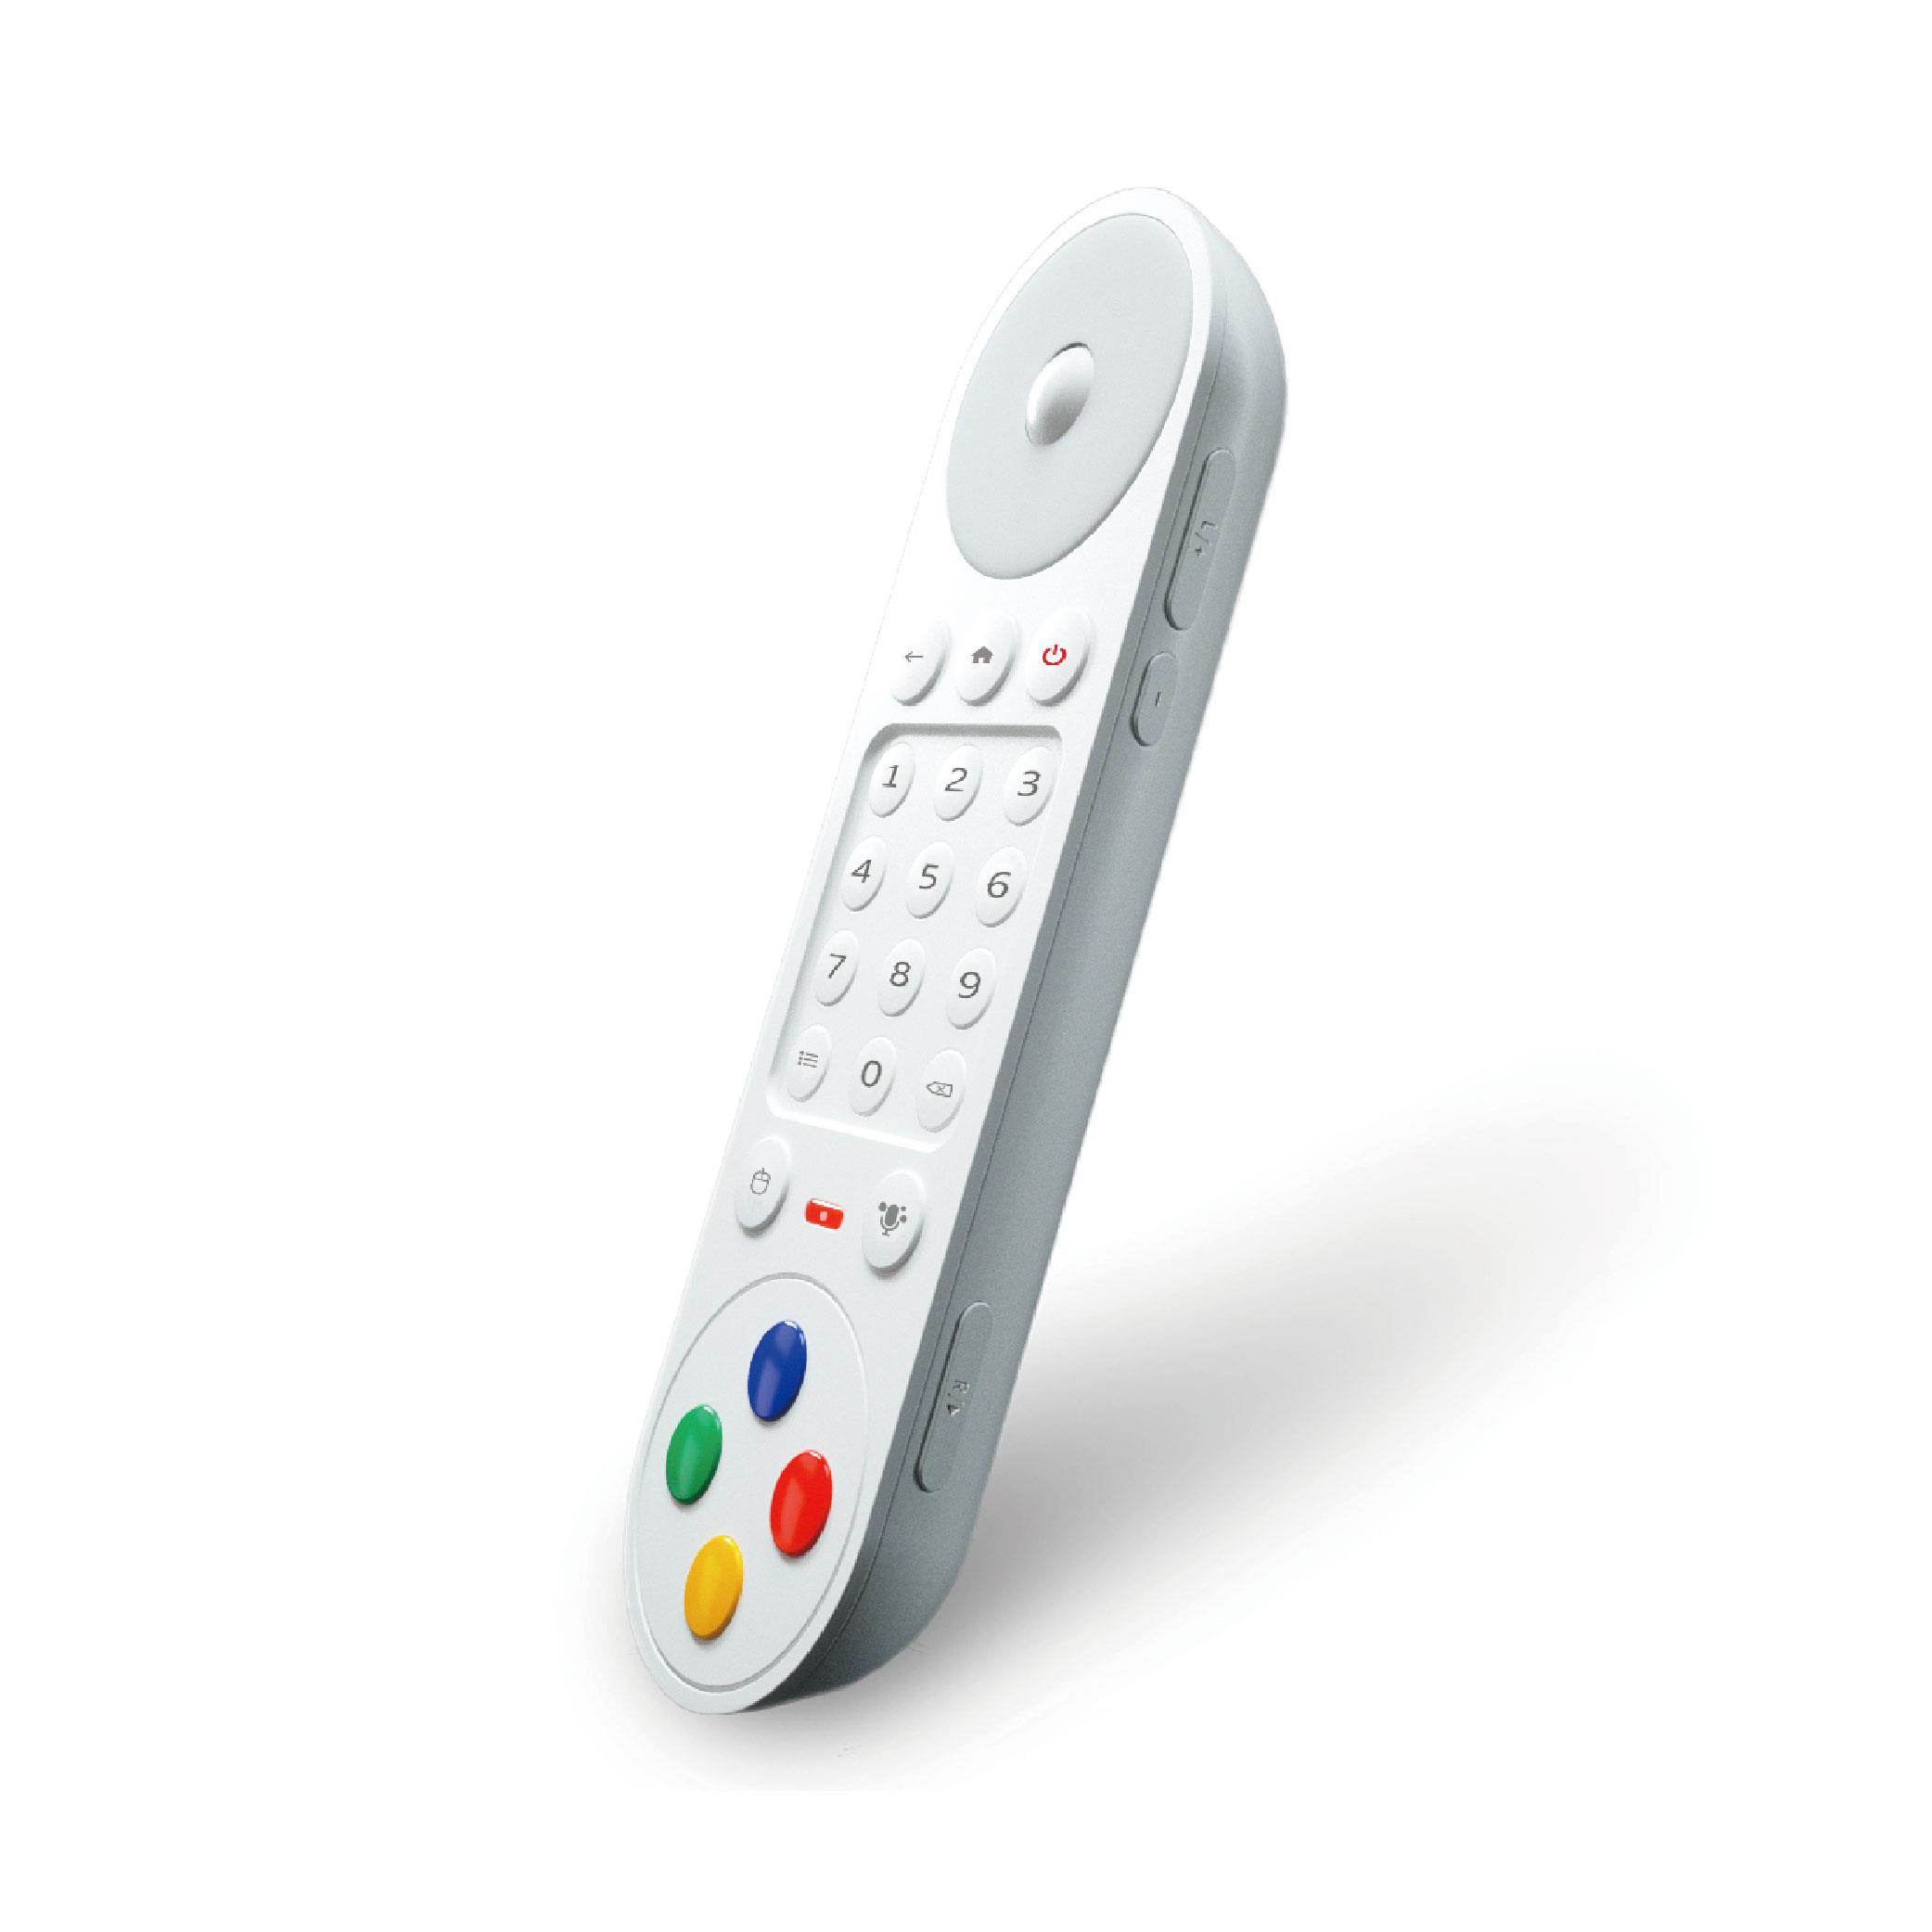 Opro9 Play Remote次世代智慧遙控器- 限量贈送TVSOGA 序號